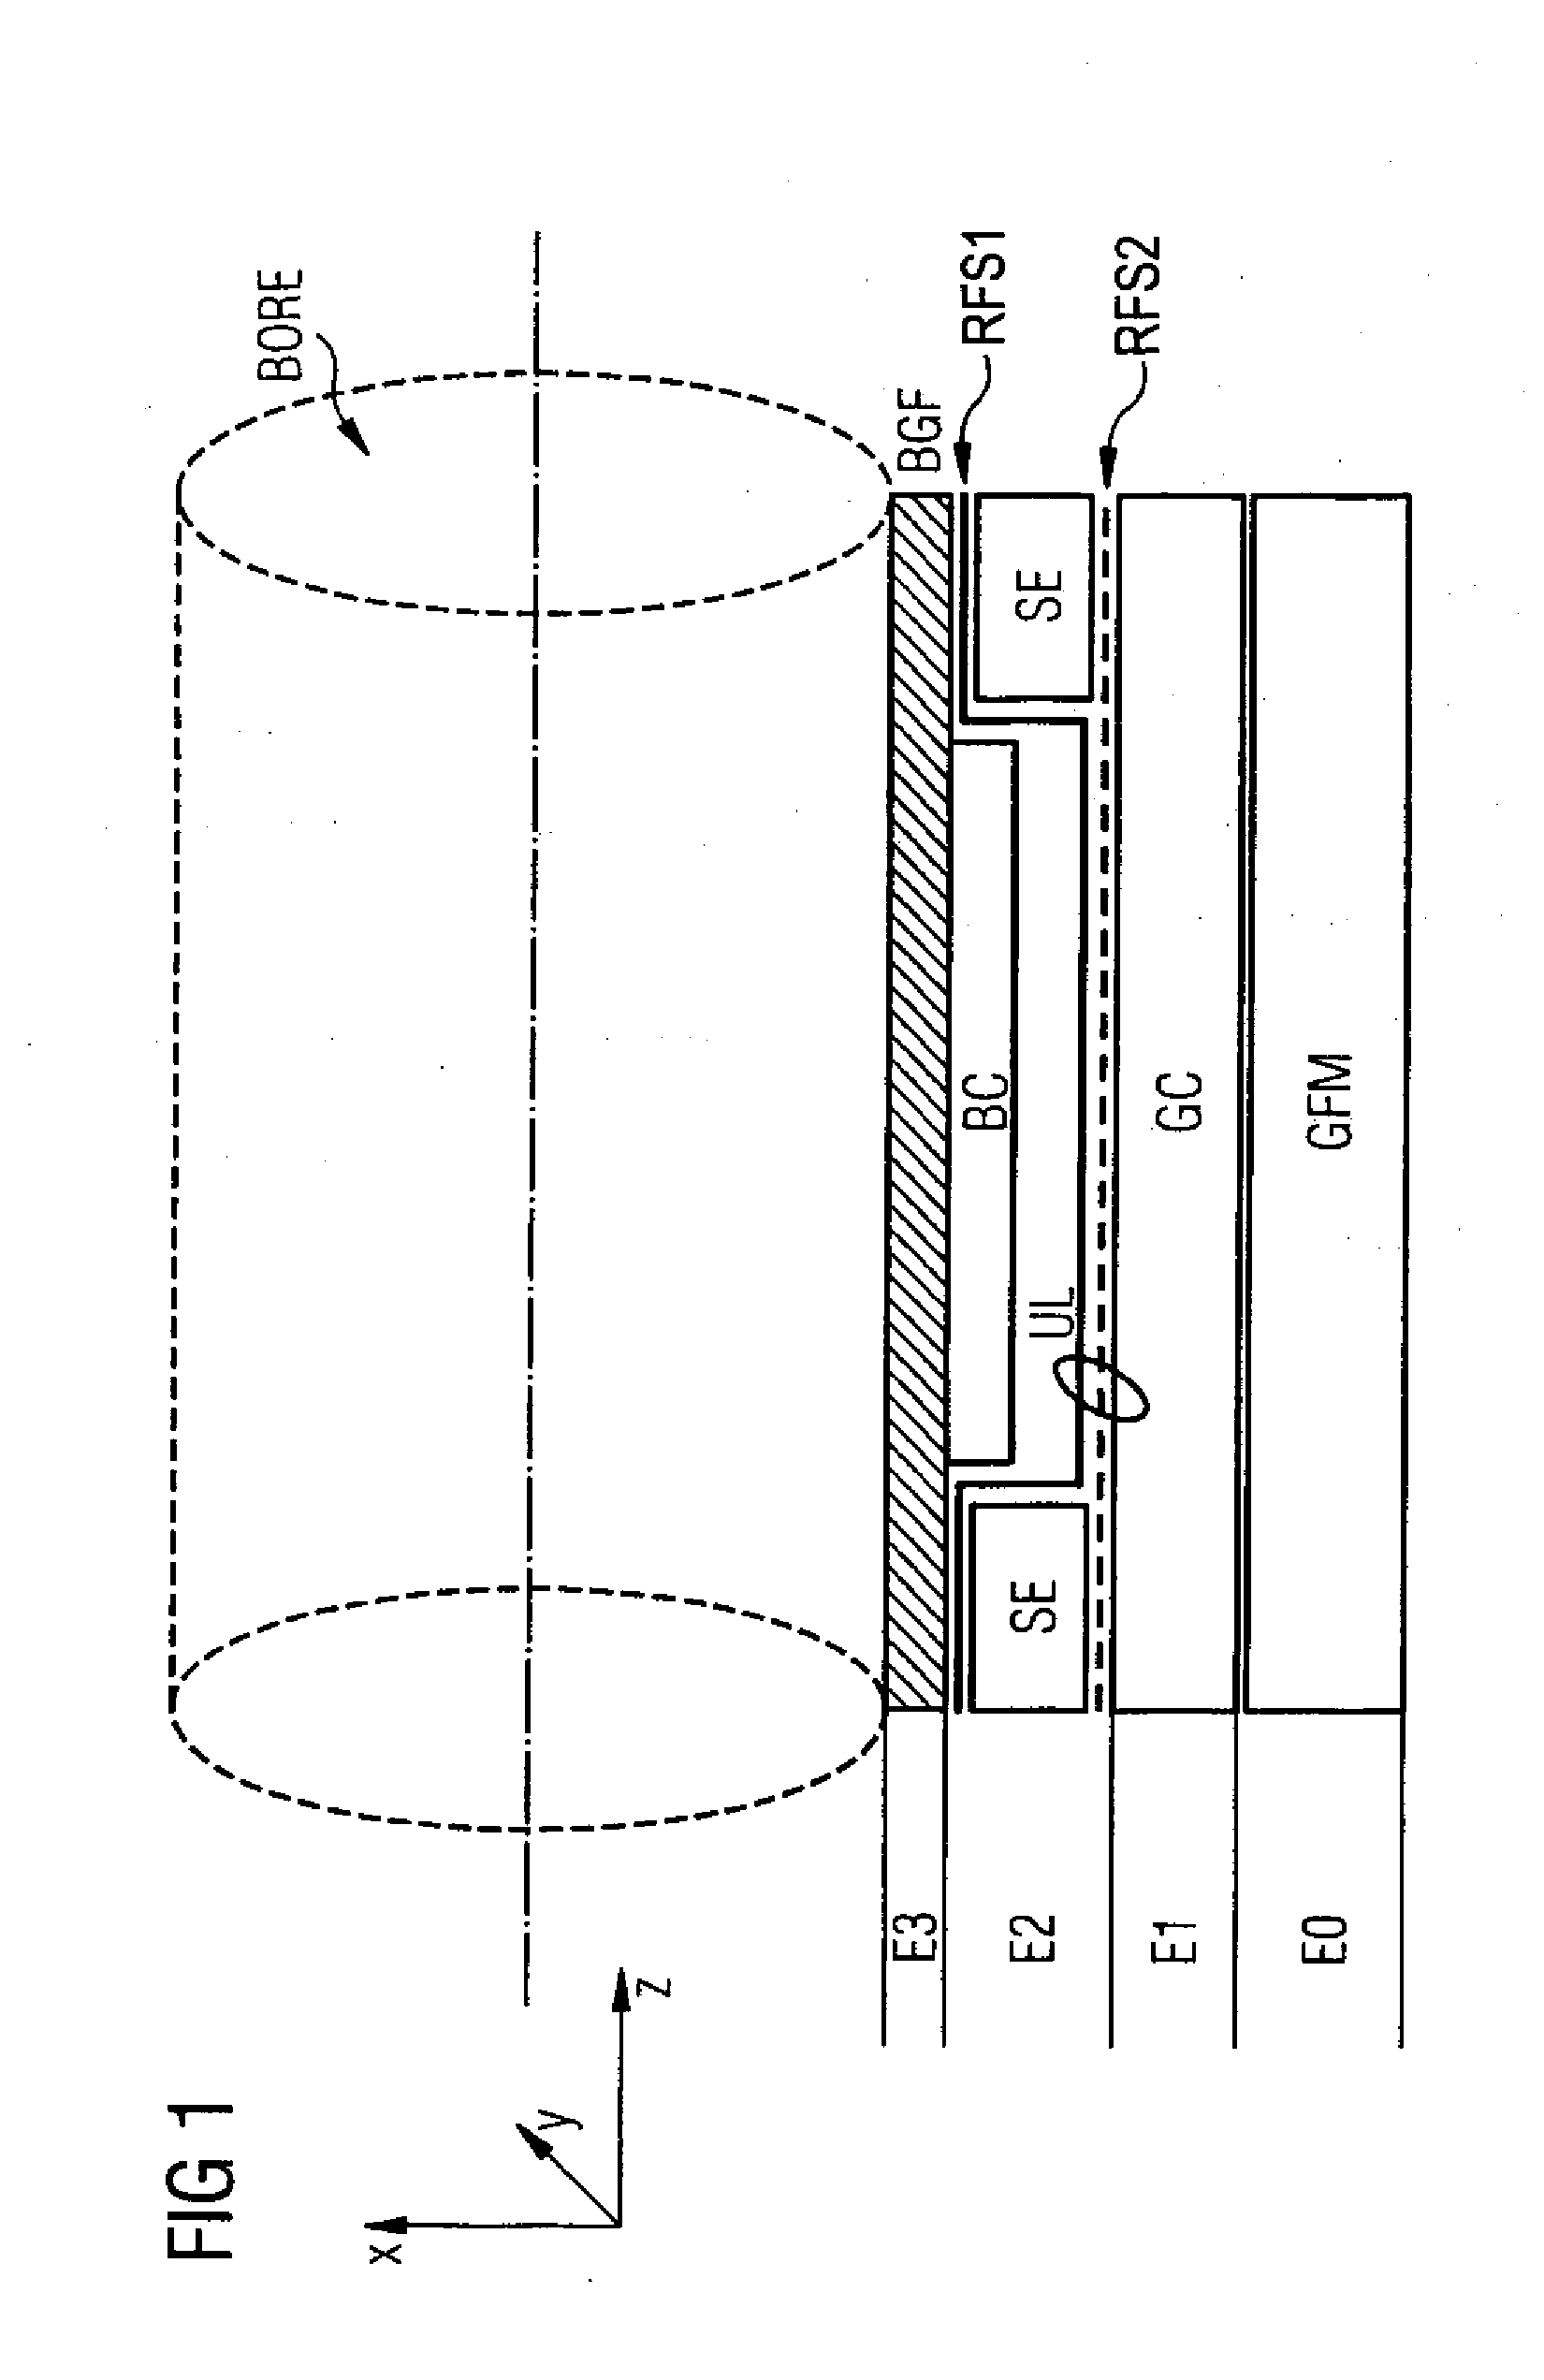 Magnetic resonance apparatus with shim arrangement